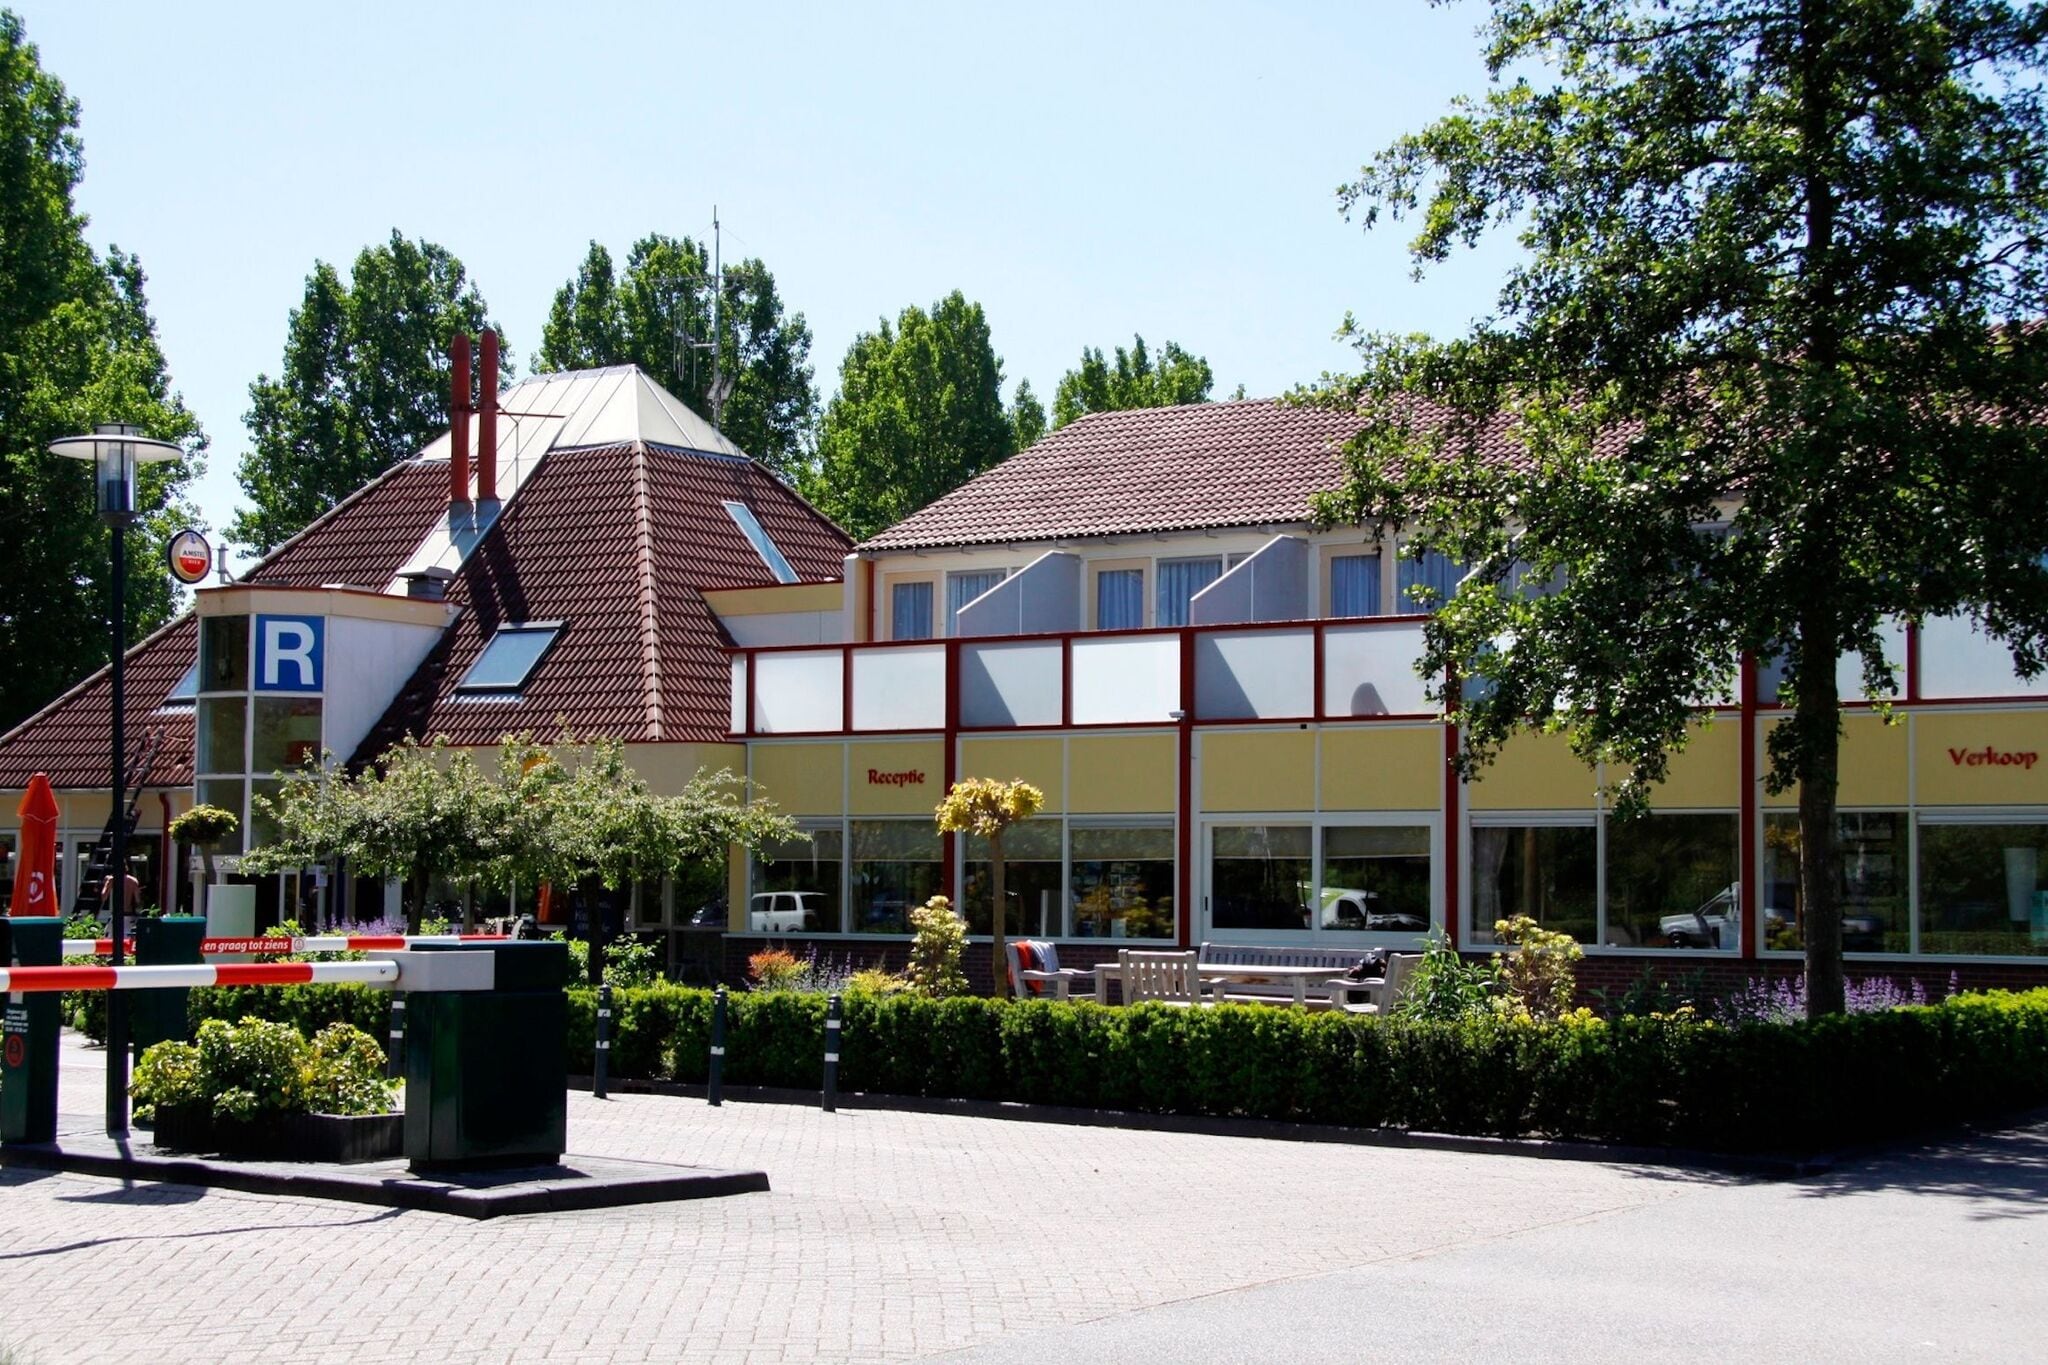 Modern chalet in Noord-Scharwoude with garden